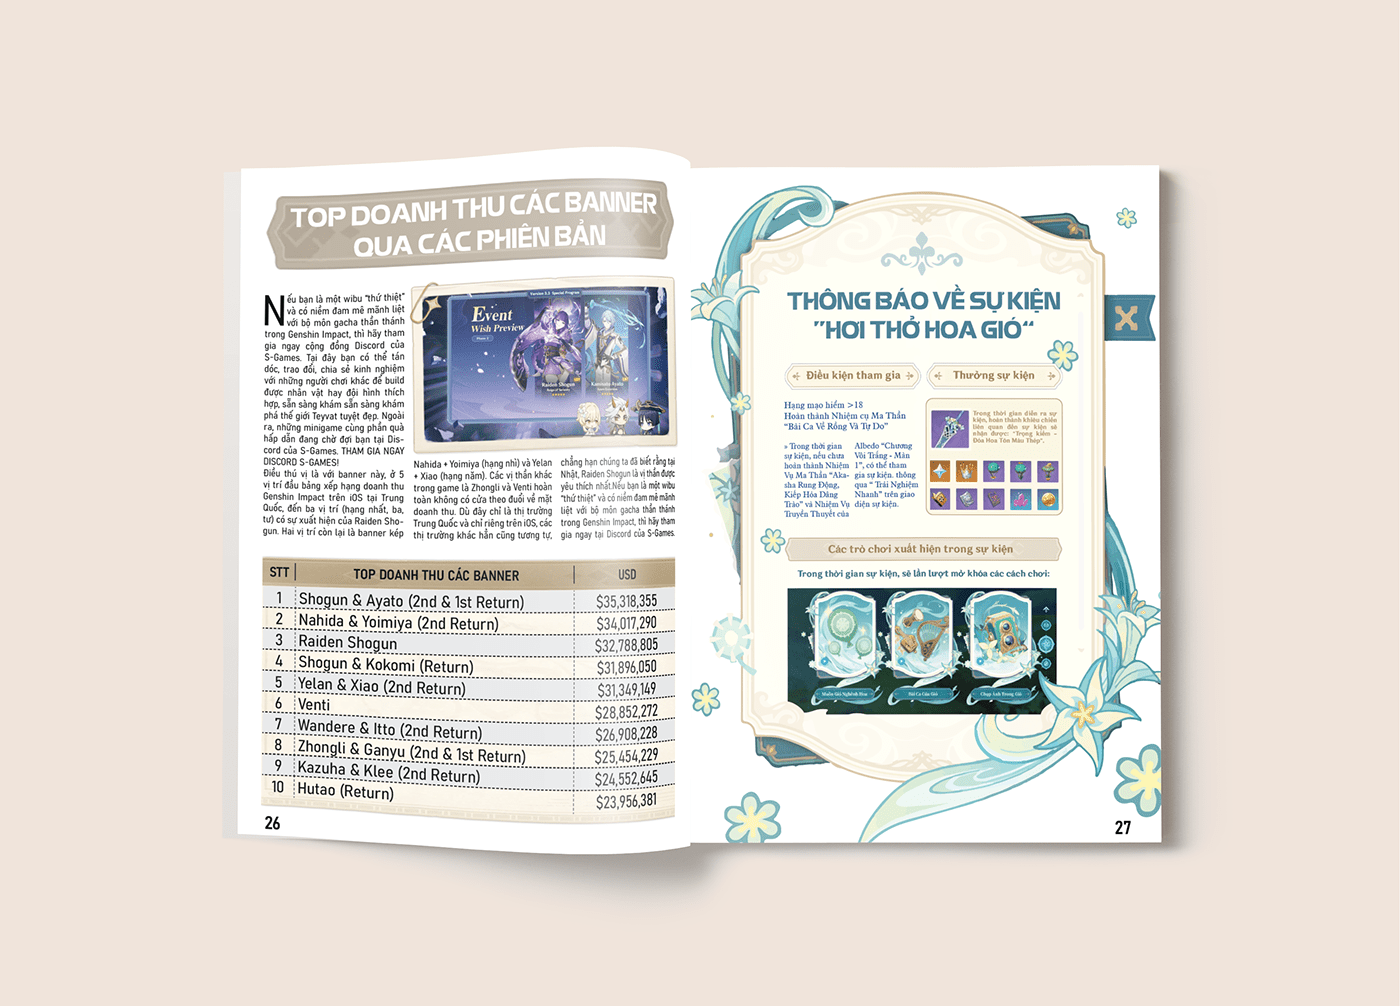 honkai star rail Genshin impact hoyoverse magazine InDesign Layout gamemagazine hoyoversegame